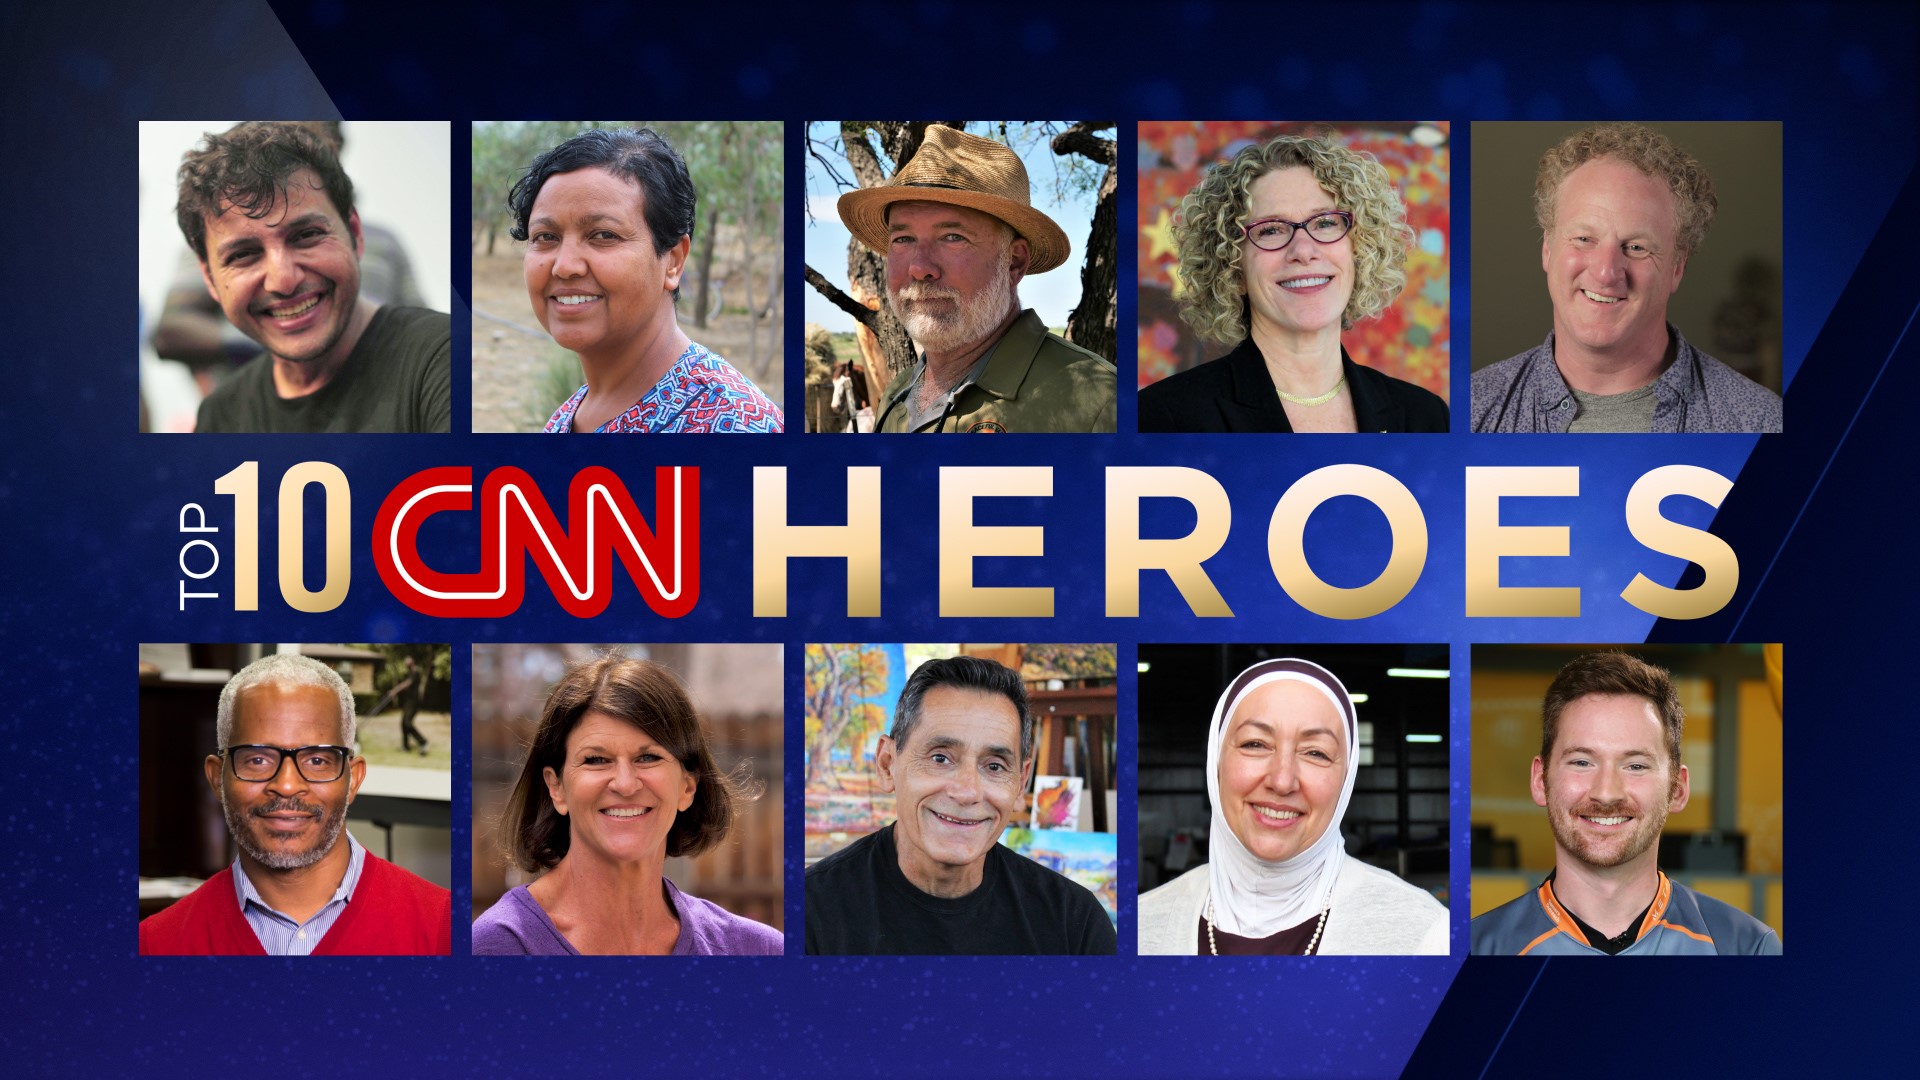 Top 10 CNN Heroes of 2019 Announced